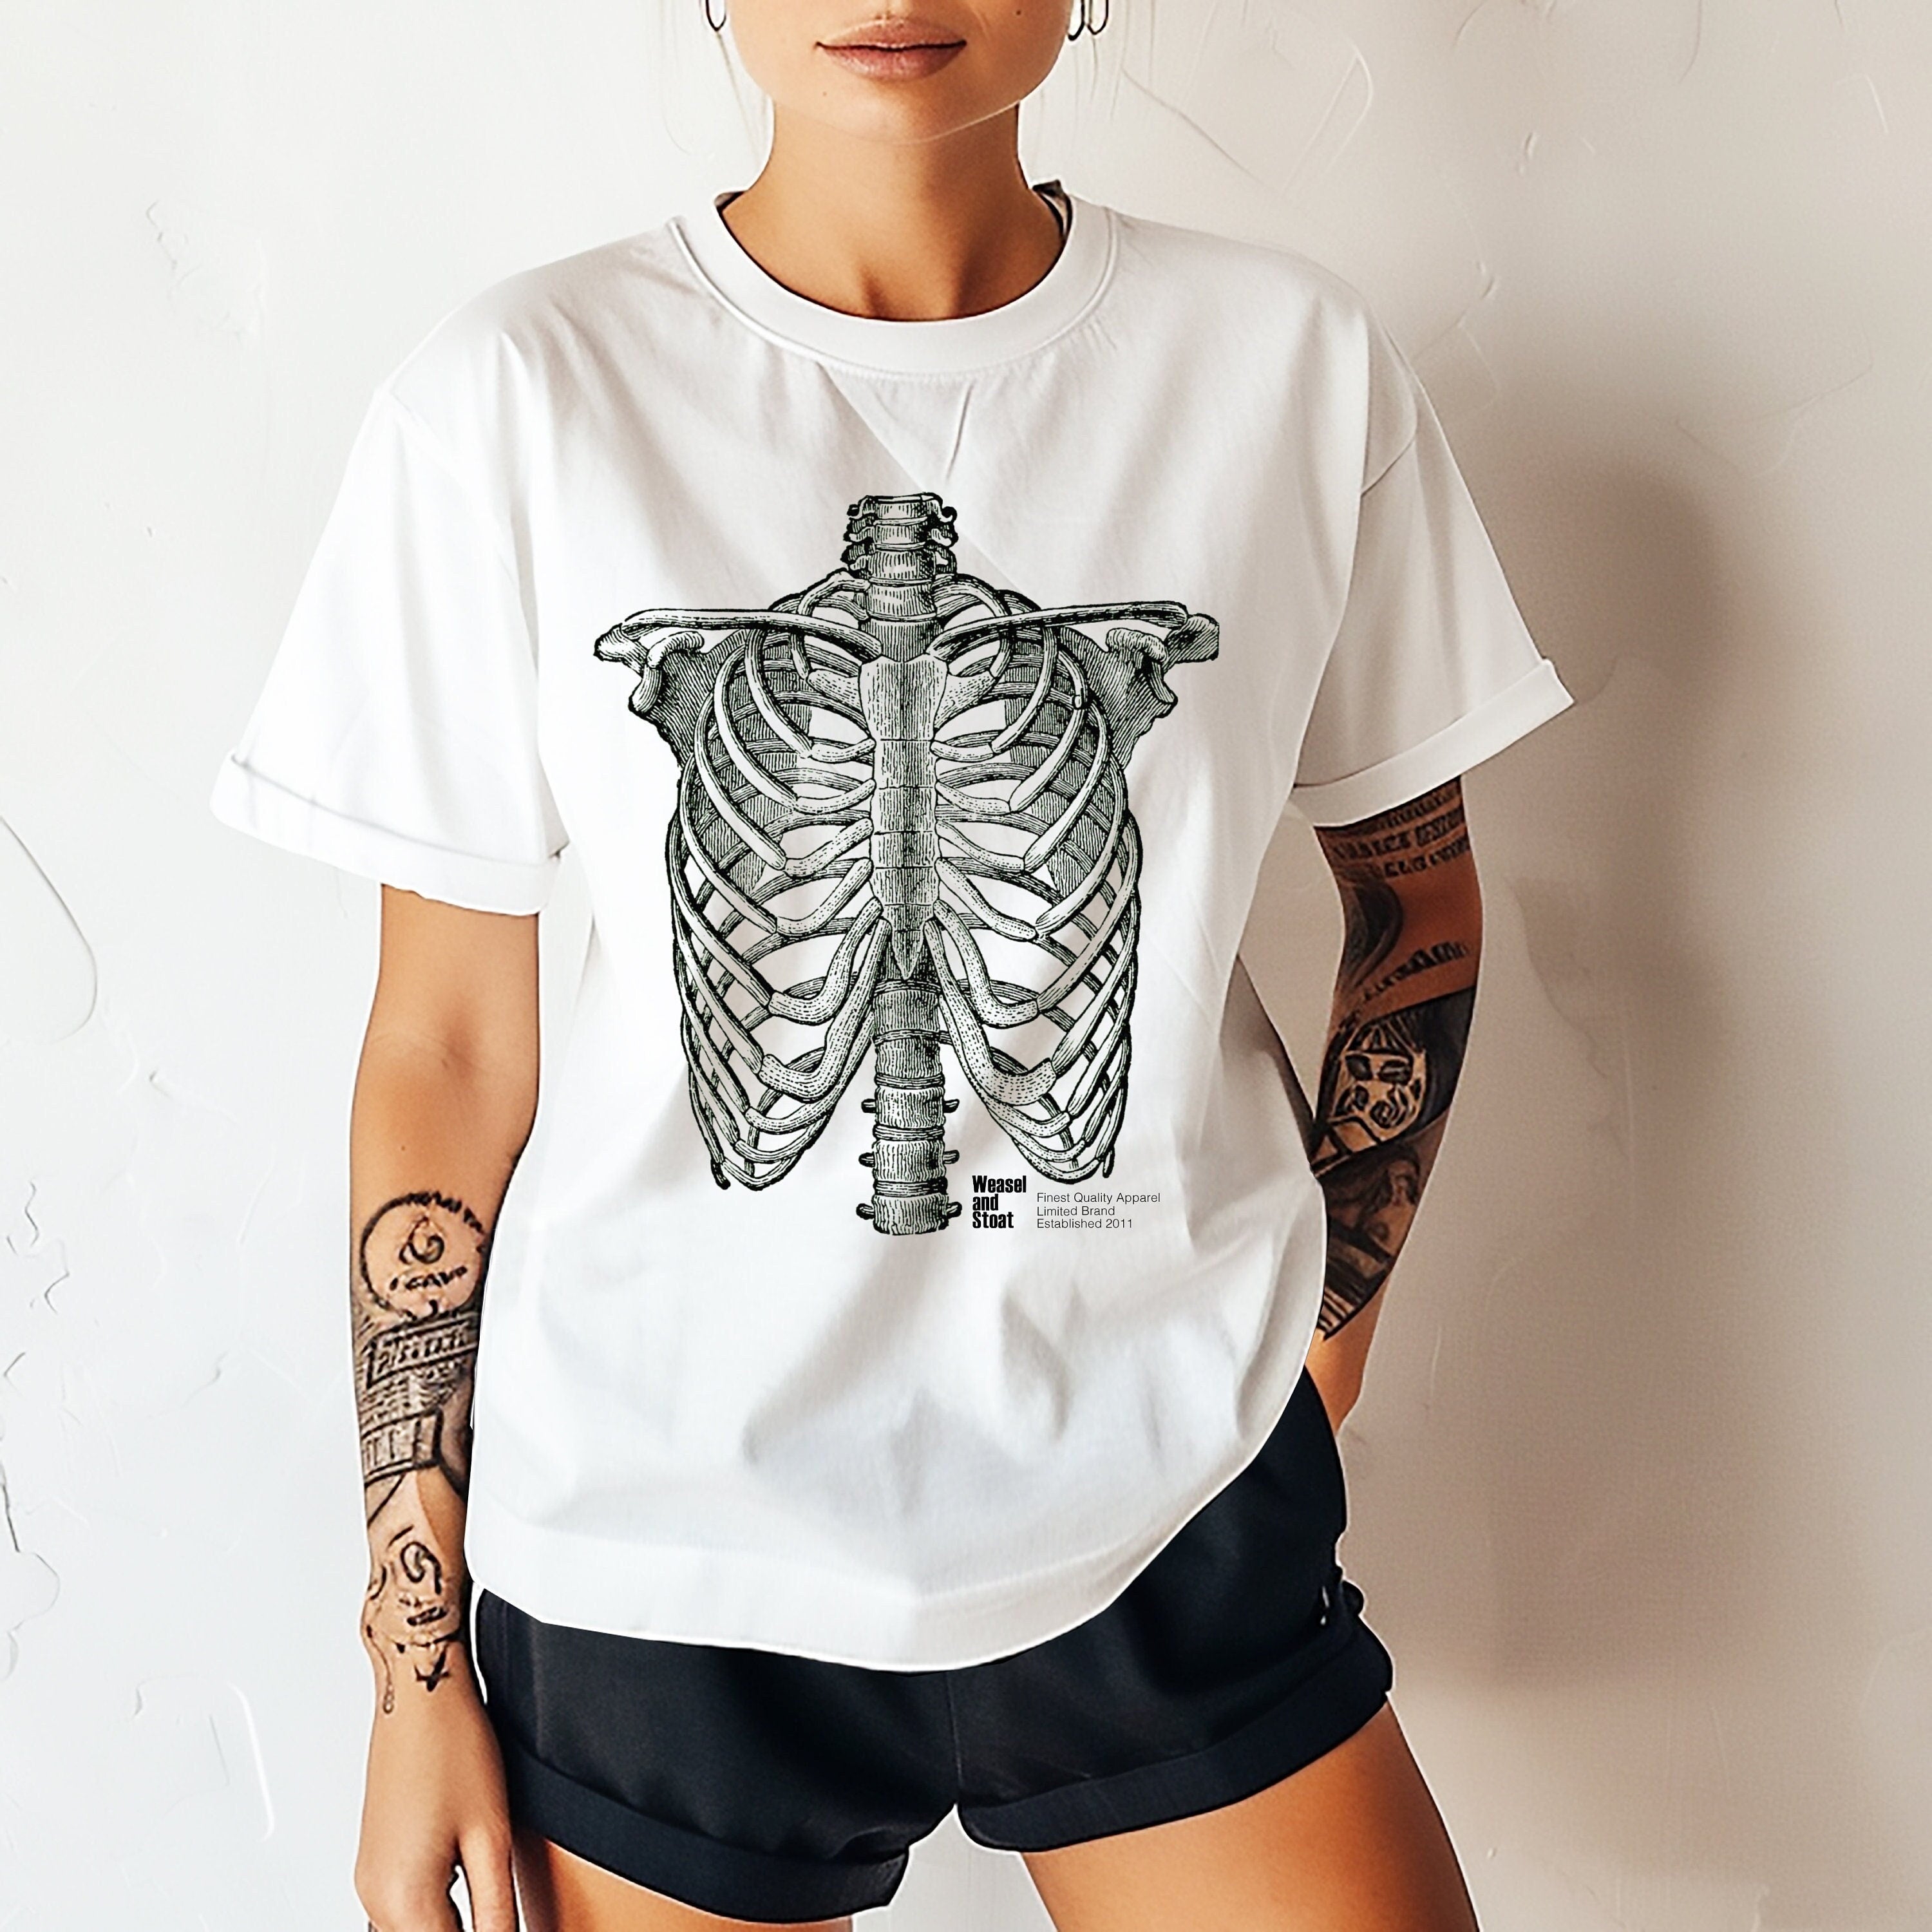 Vintage Skeleton Rib Cage T-Shirt | Classic White Unisex Tee | Old Medical Illustration | Skate & Surf Wear | Streetwear, Aesthetic Tee